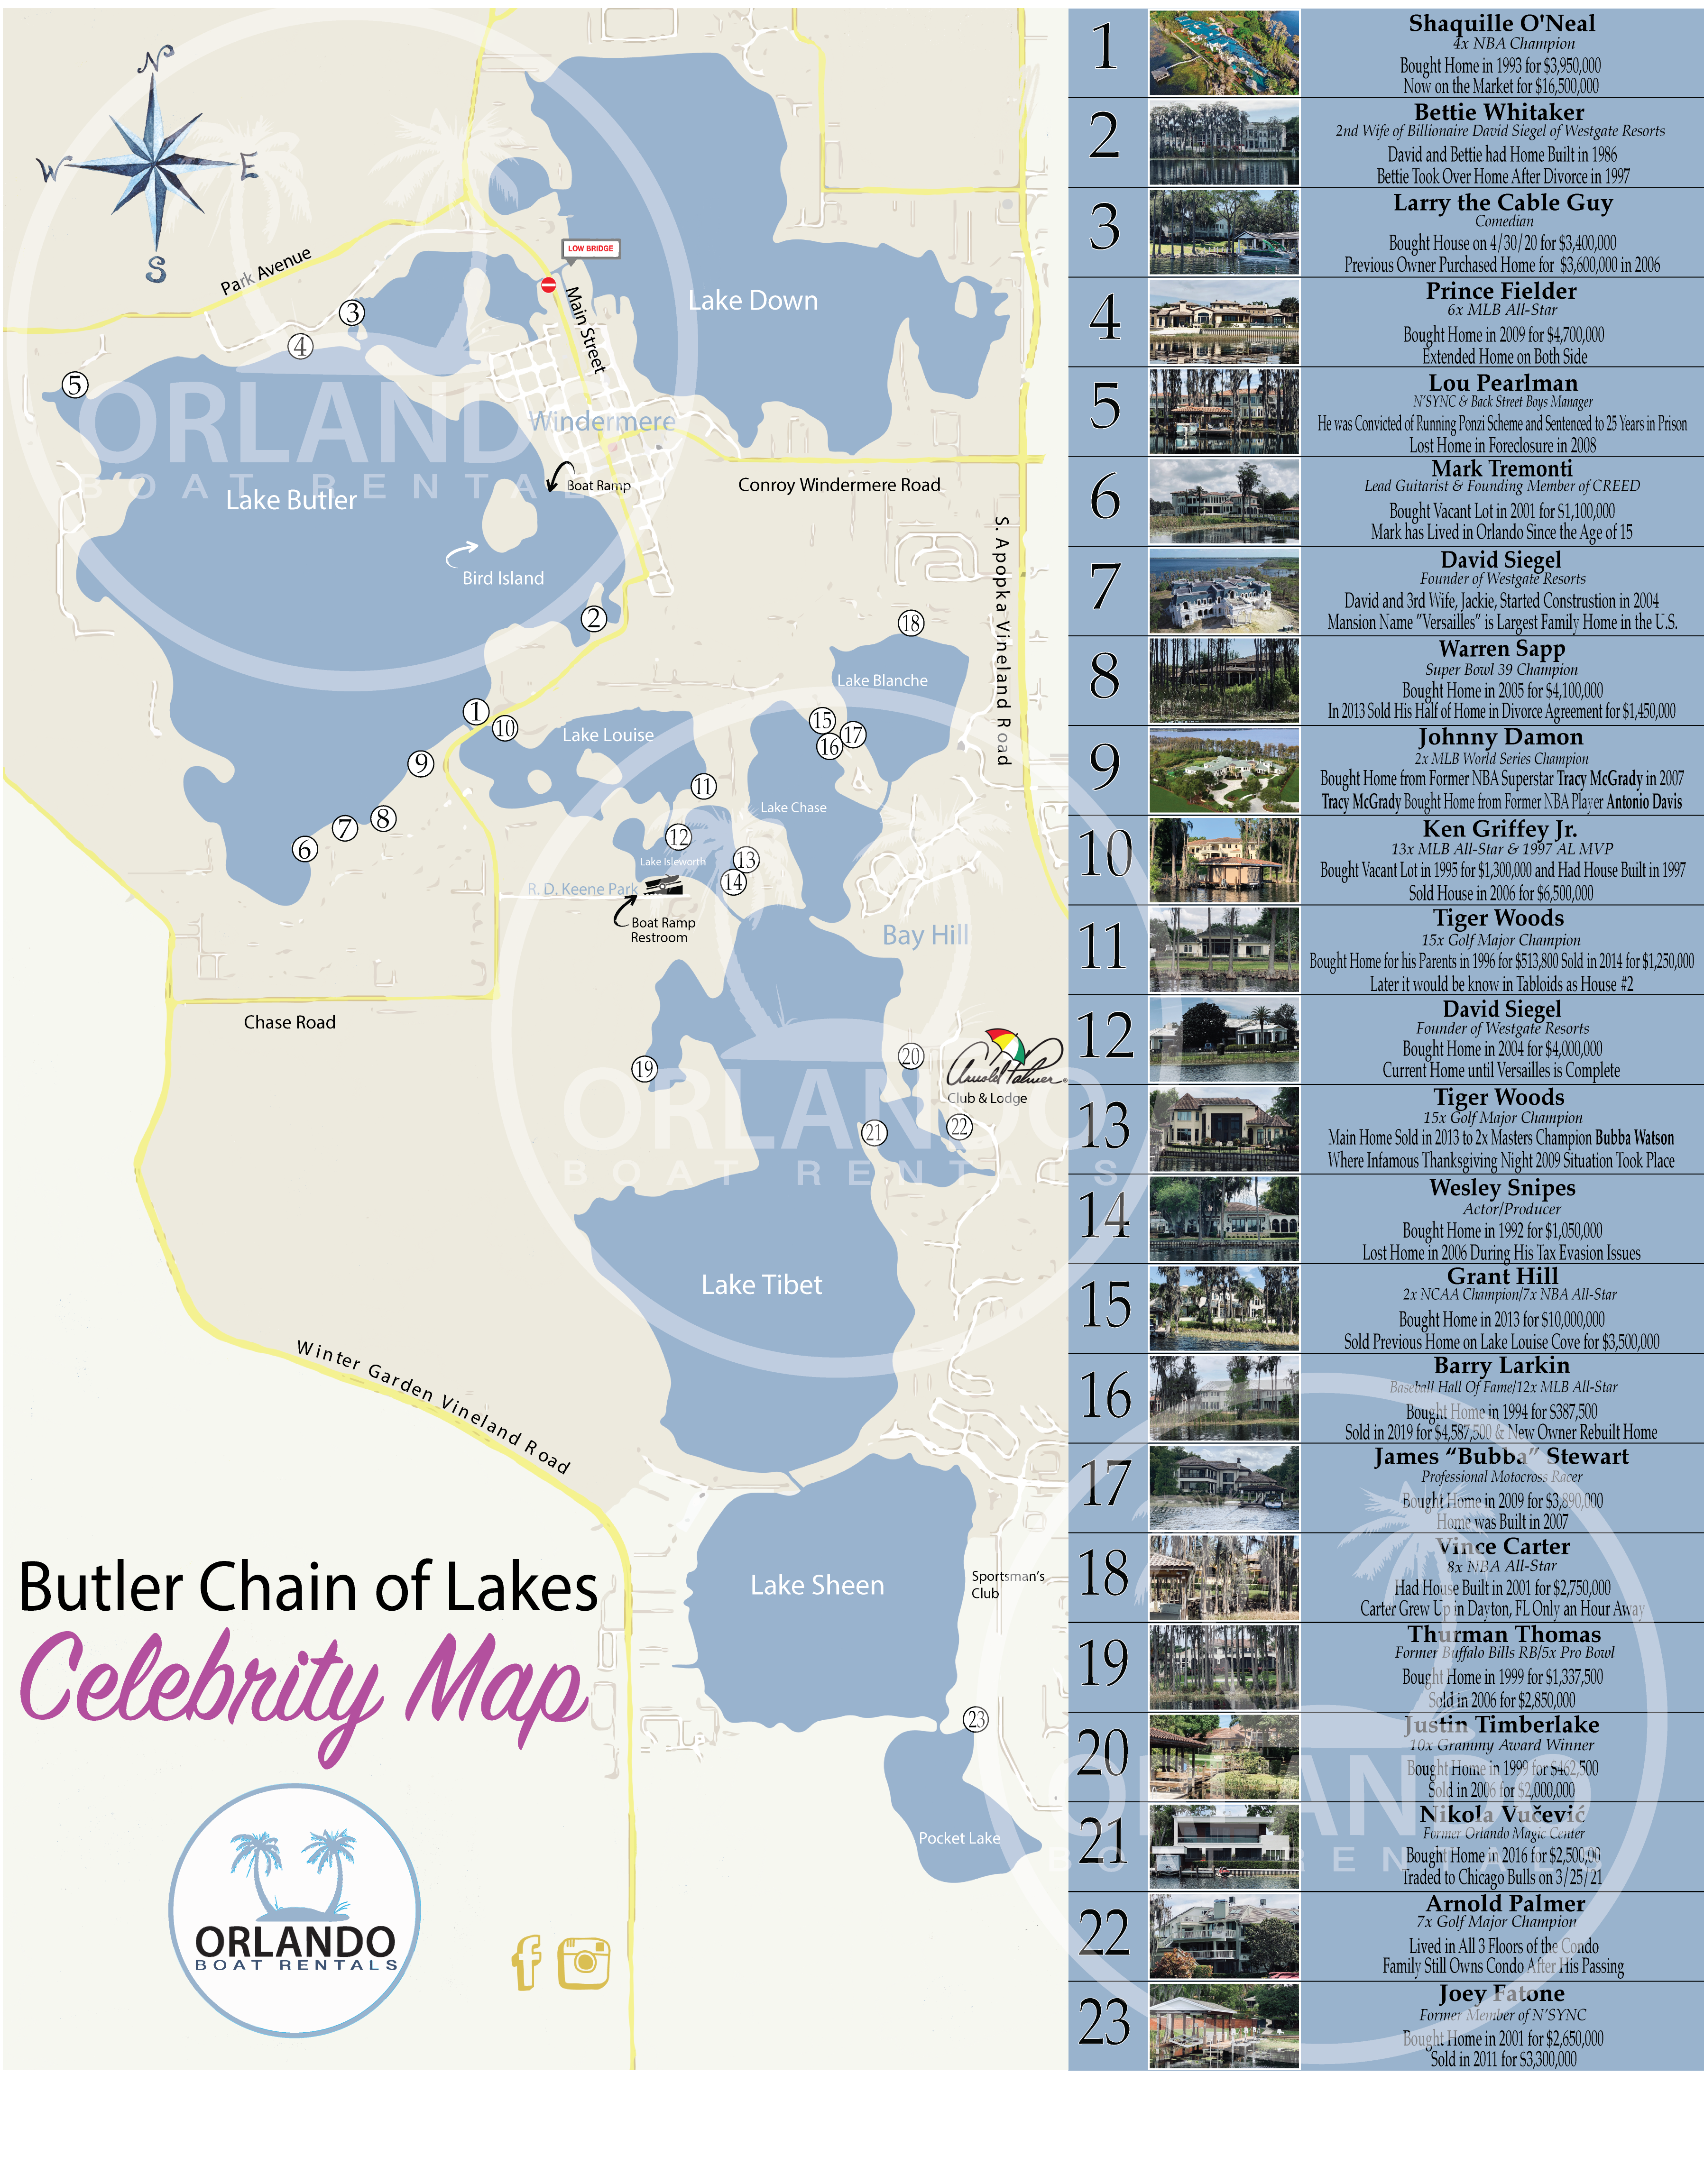 Orlando Boat Rentals Celebrity map